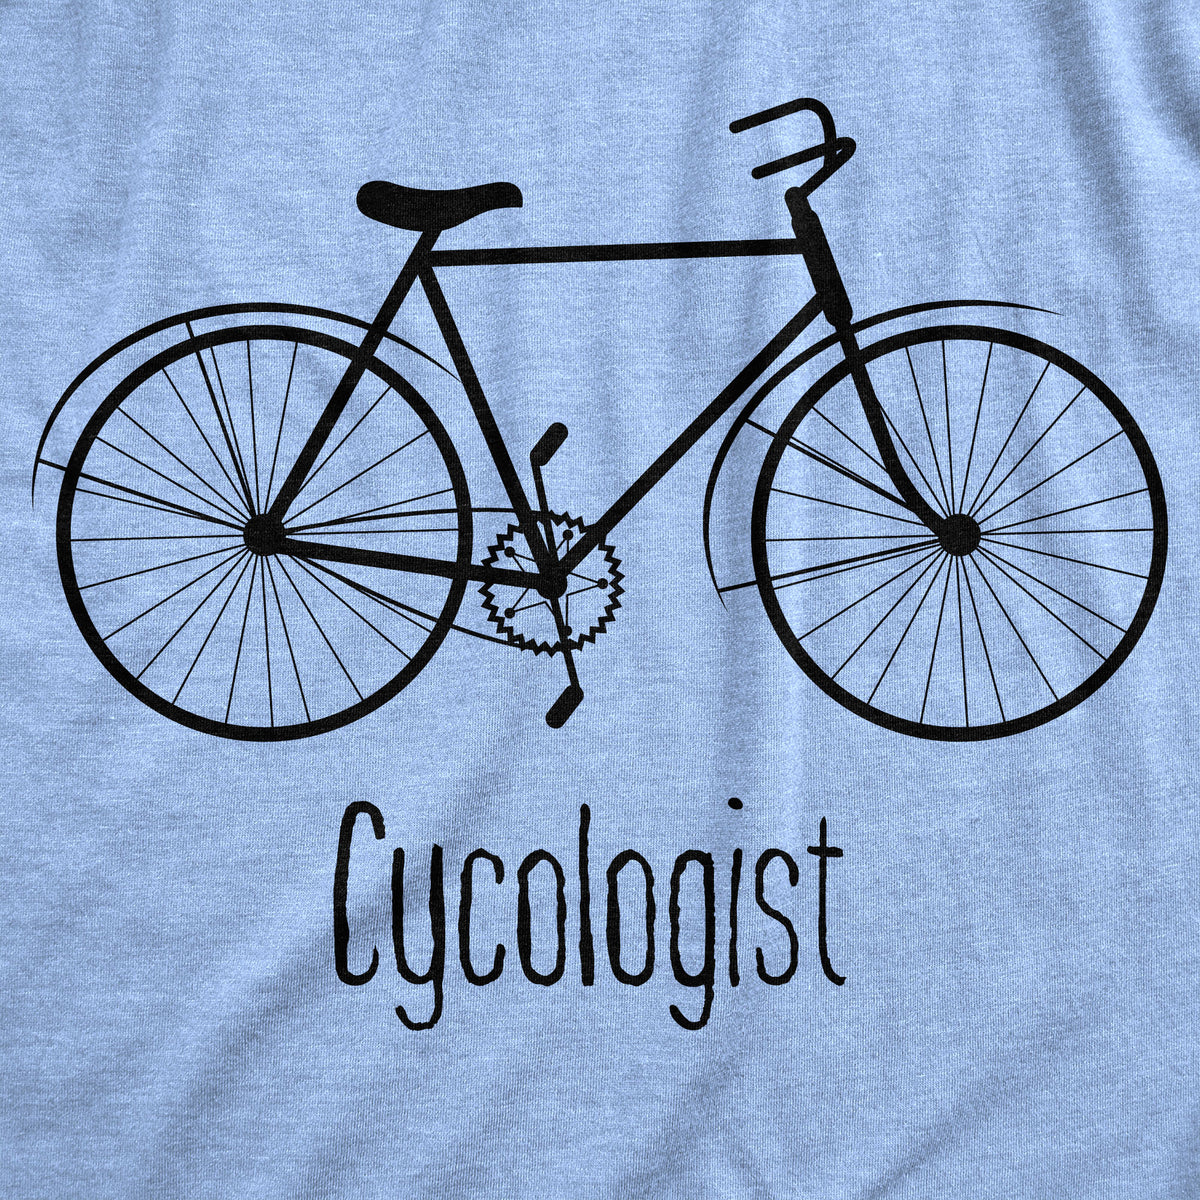 Cycologist Men&#39;s T Shirt